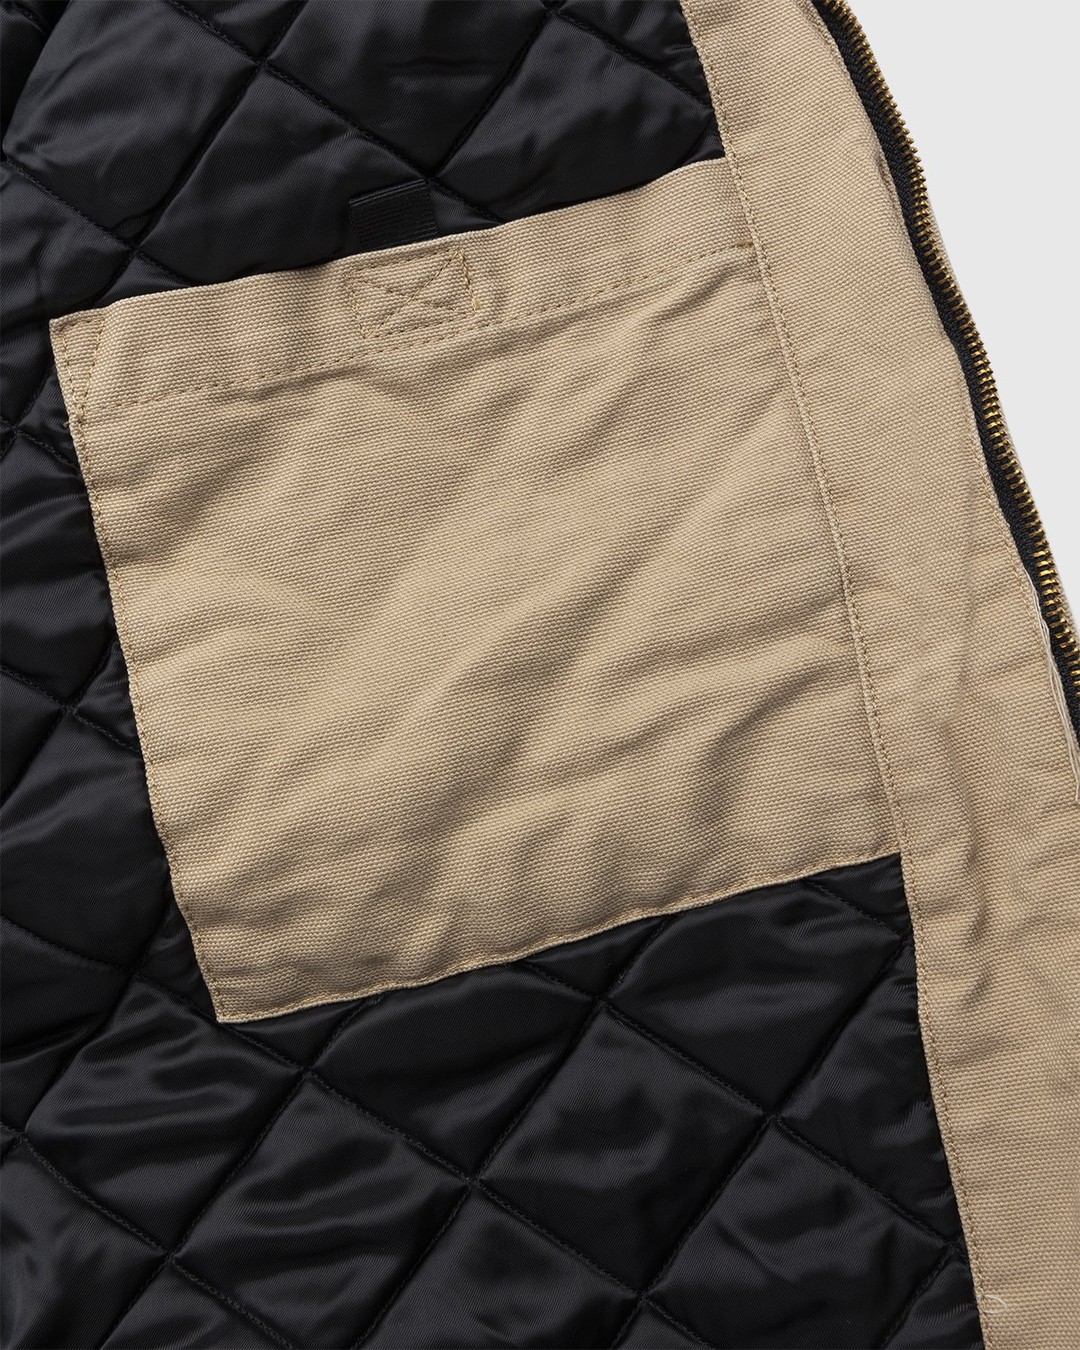 Carhartt WIP – OG Active Jacket Brown - Outerwear - Brown - Image 6